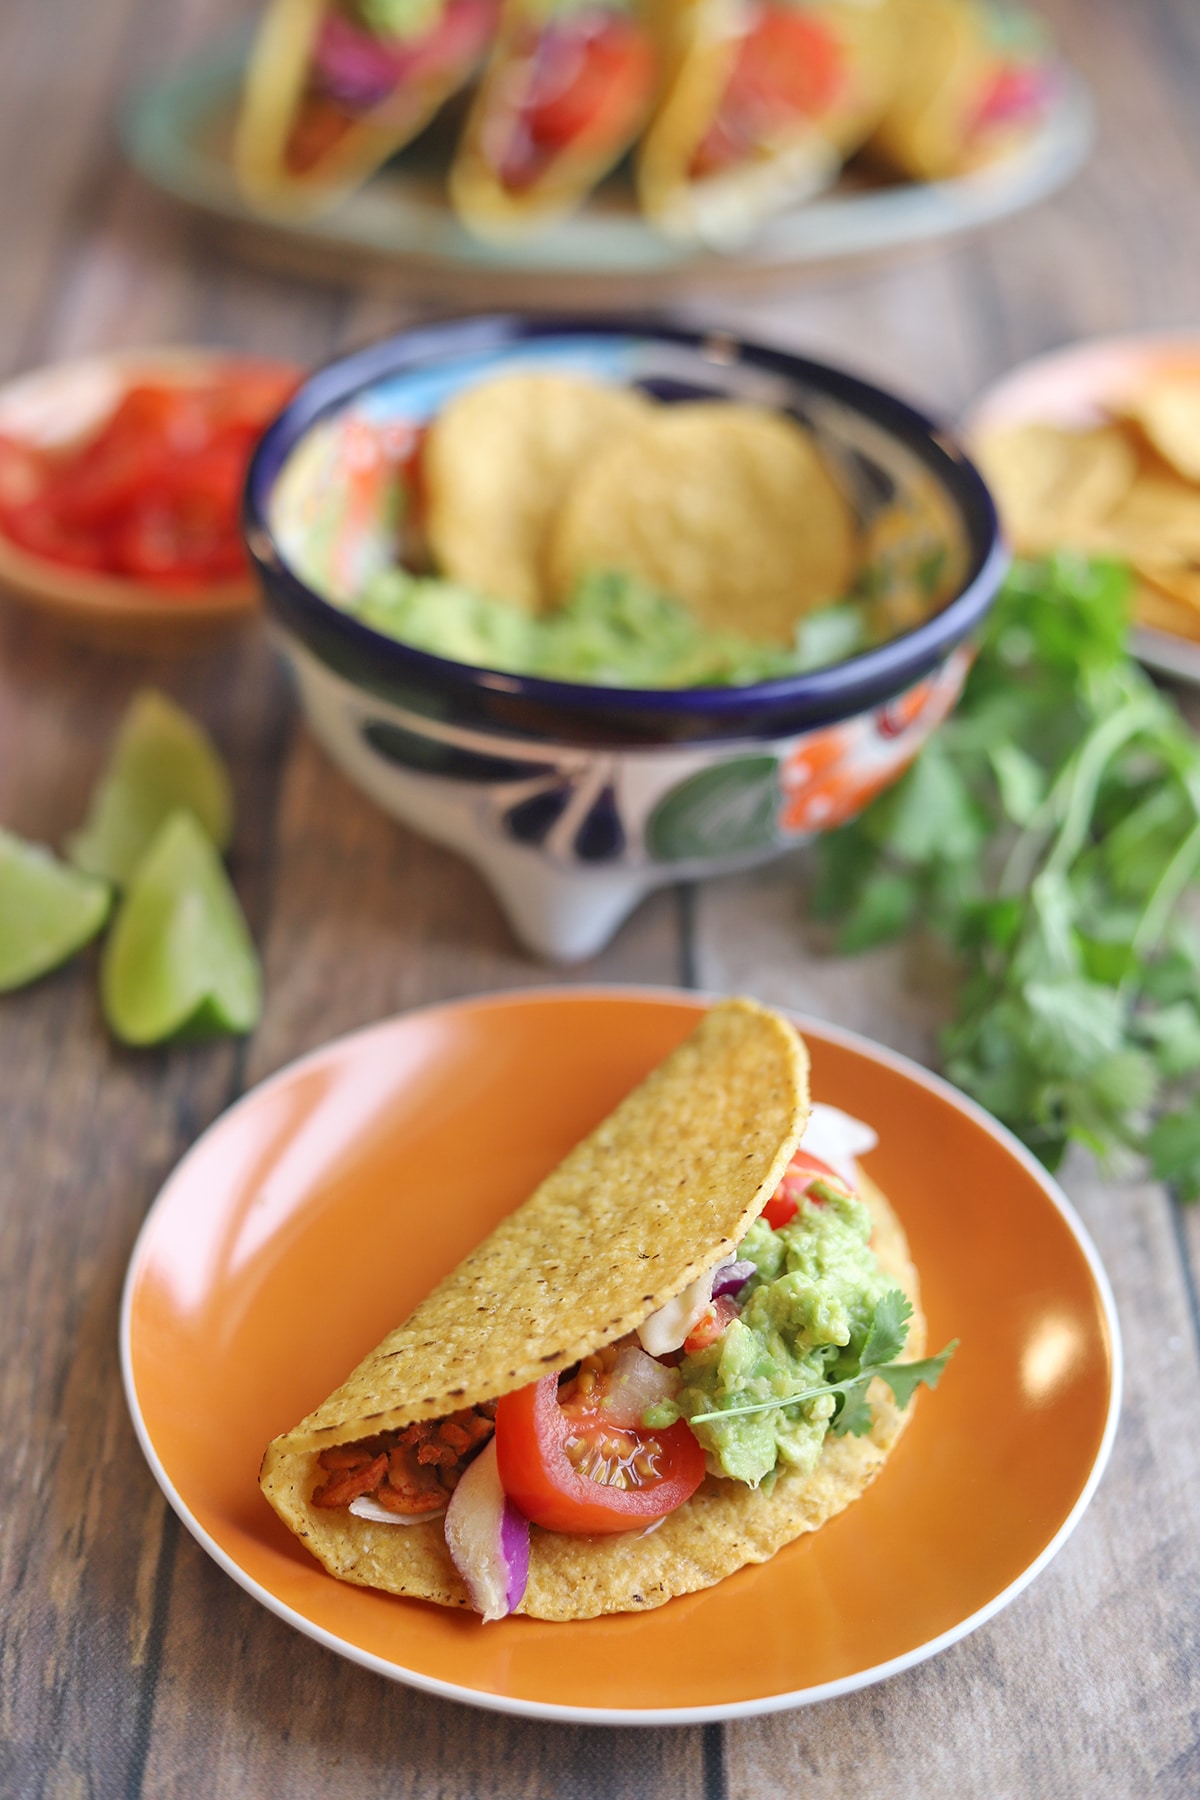 Orange plate holding single taco by bowl of guacamole.